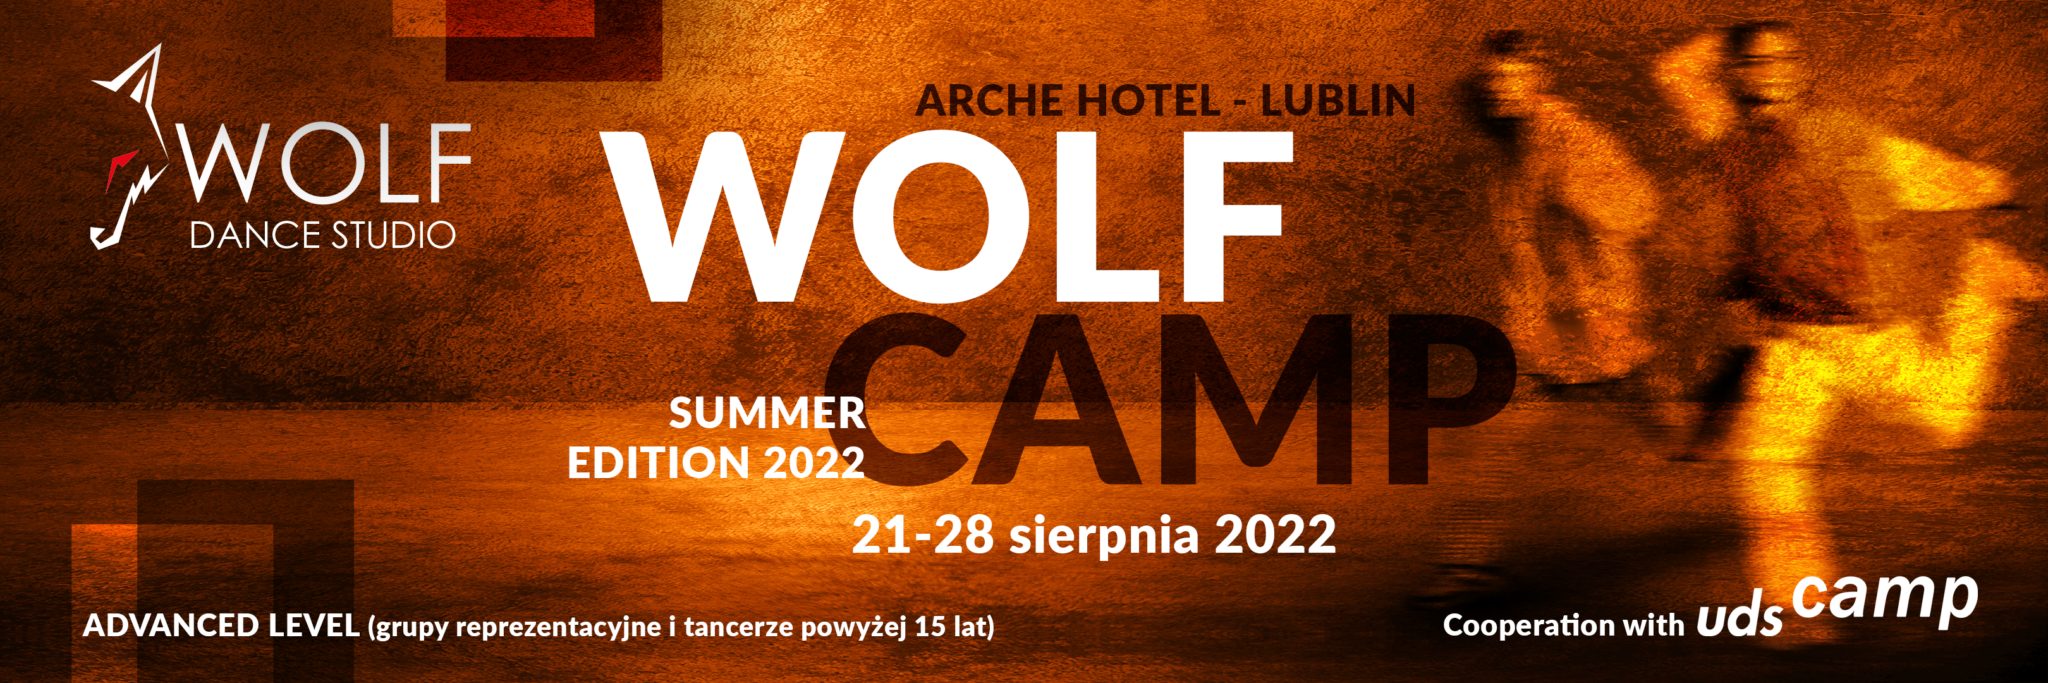 WOLF Camp Summer Edition 2022 Adult/Advanced Level - Wolf Dance Studio